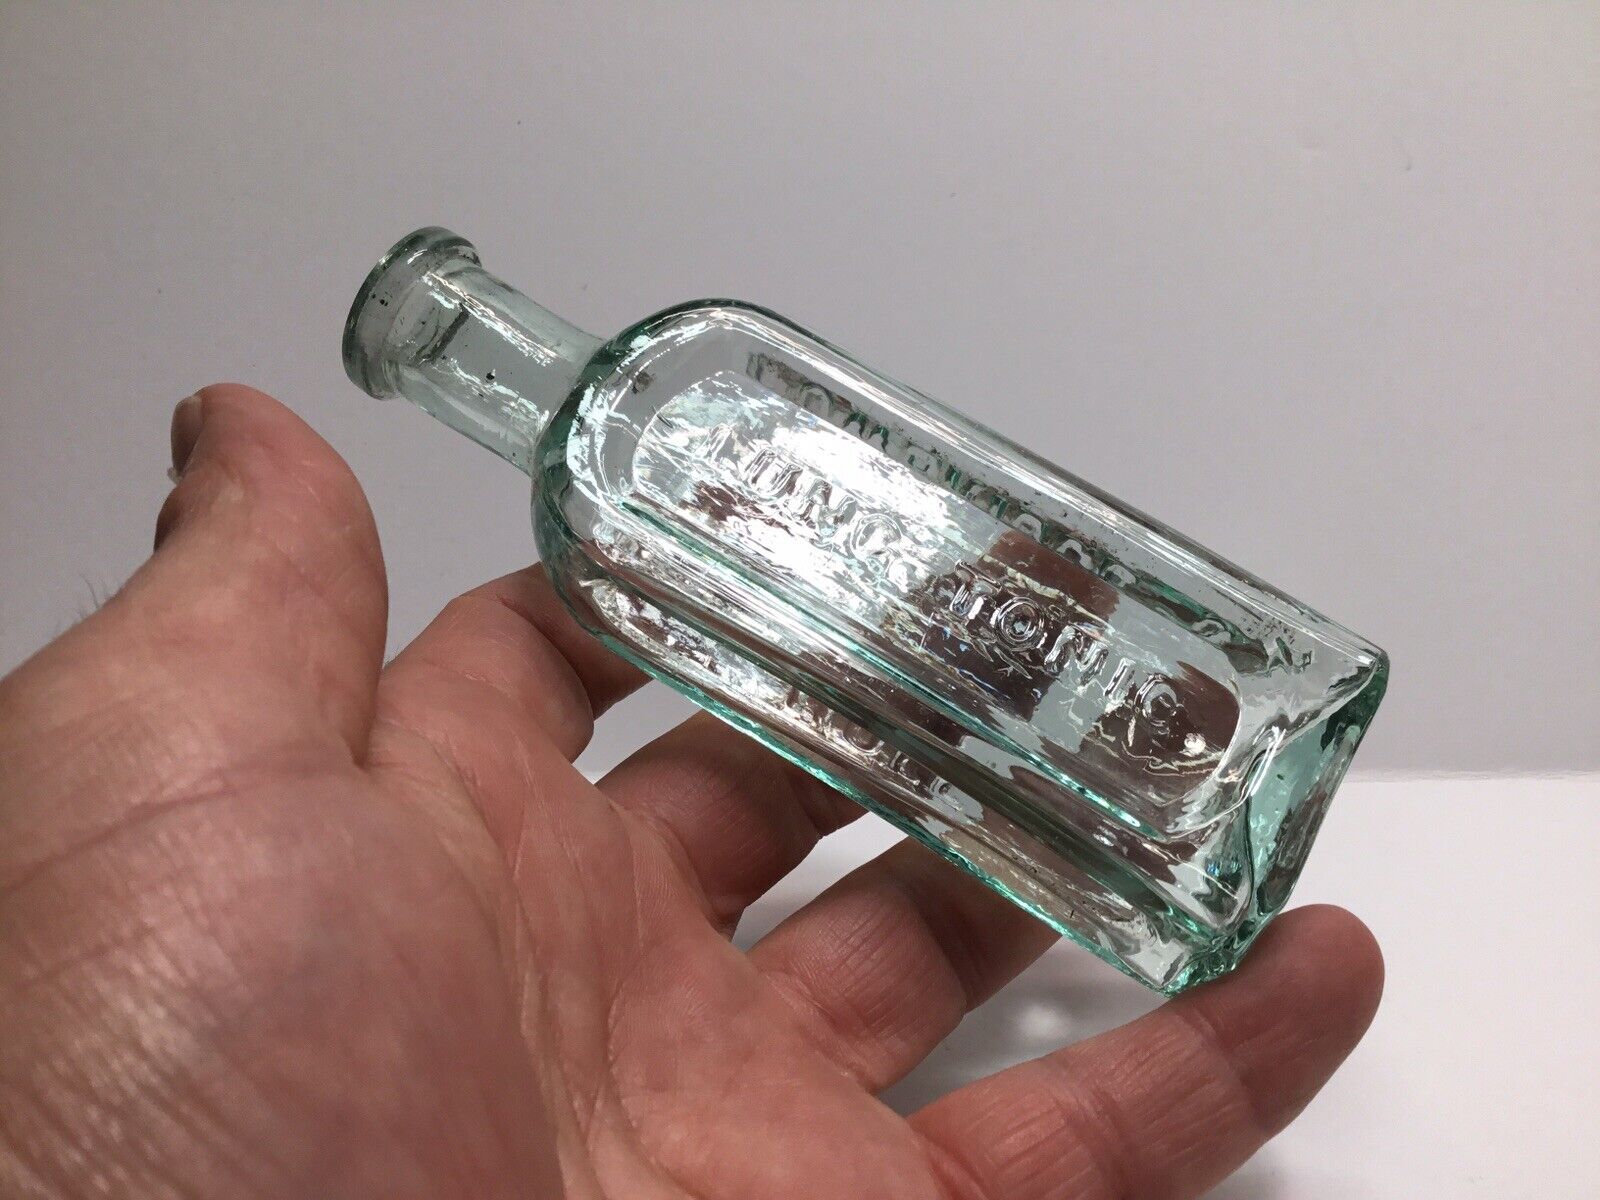 Antique Aqua Colored Lung Tonic Medicine Bottle.